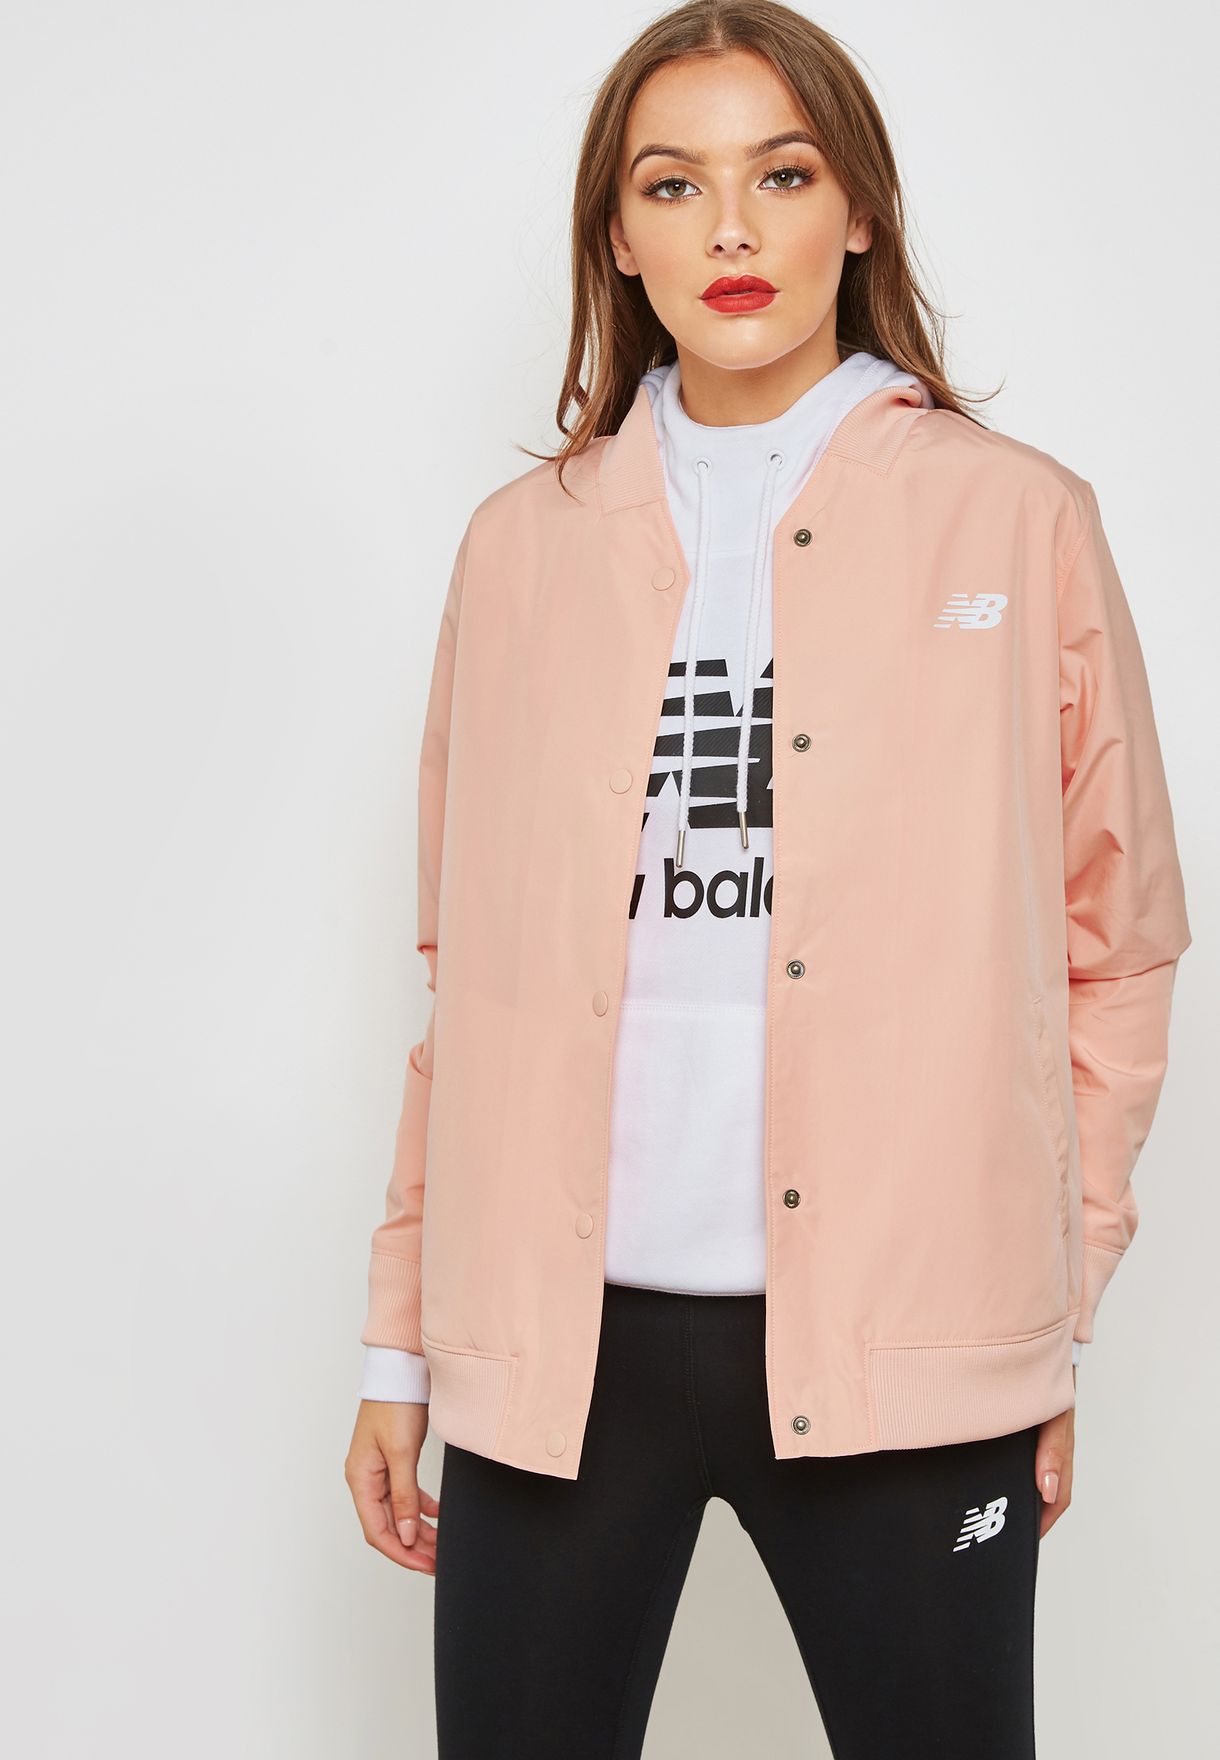 new balance pink jacket